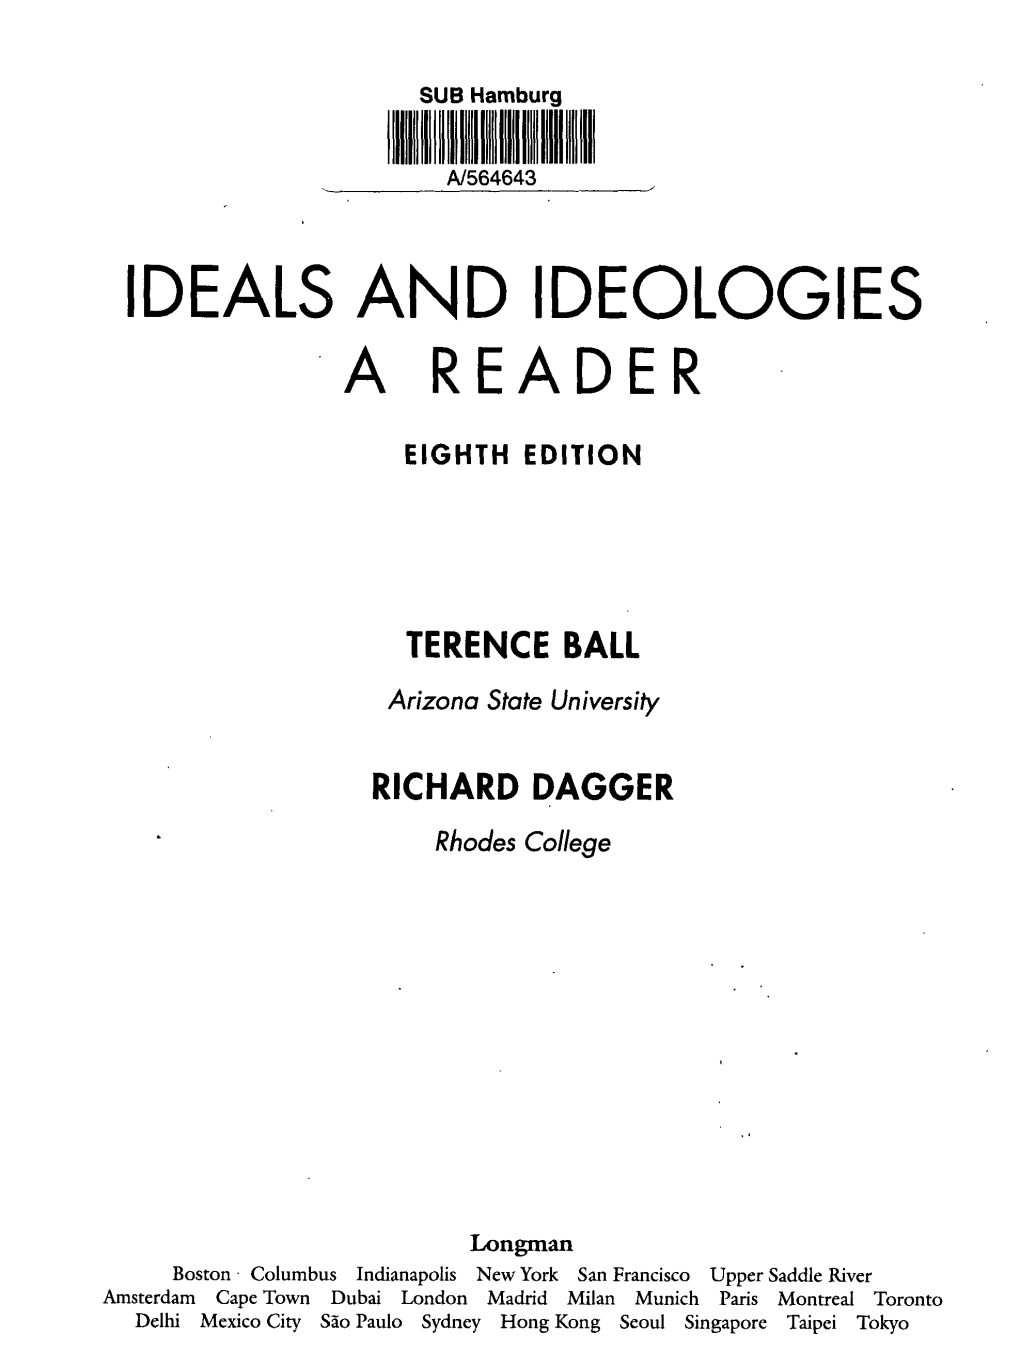 Ideals and Ideologies a Reader